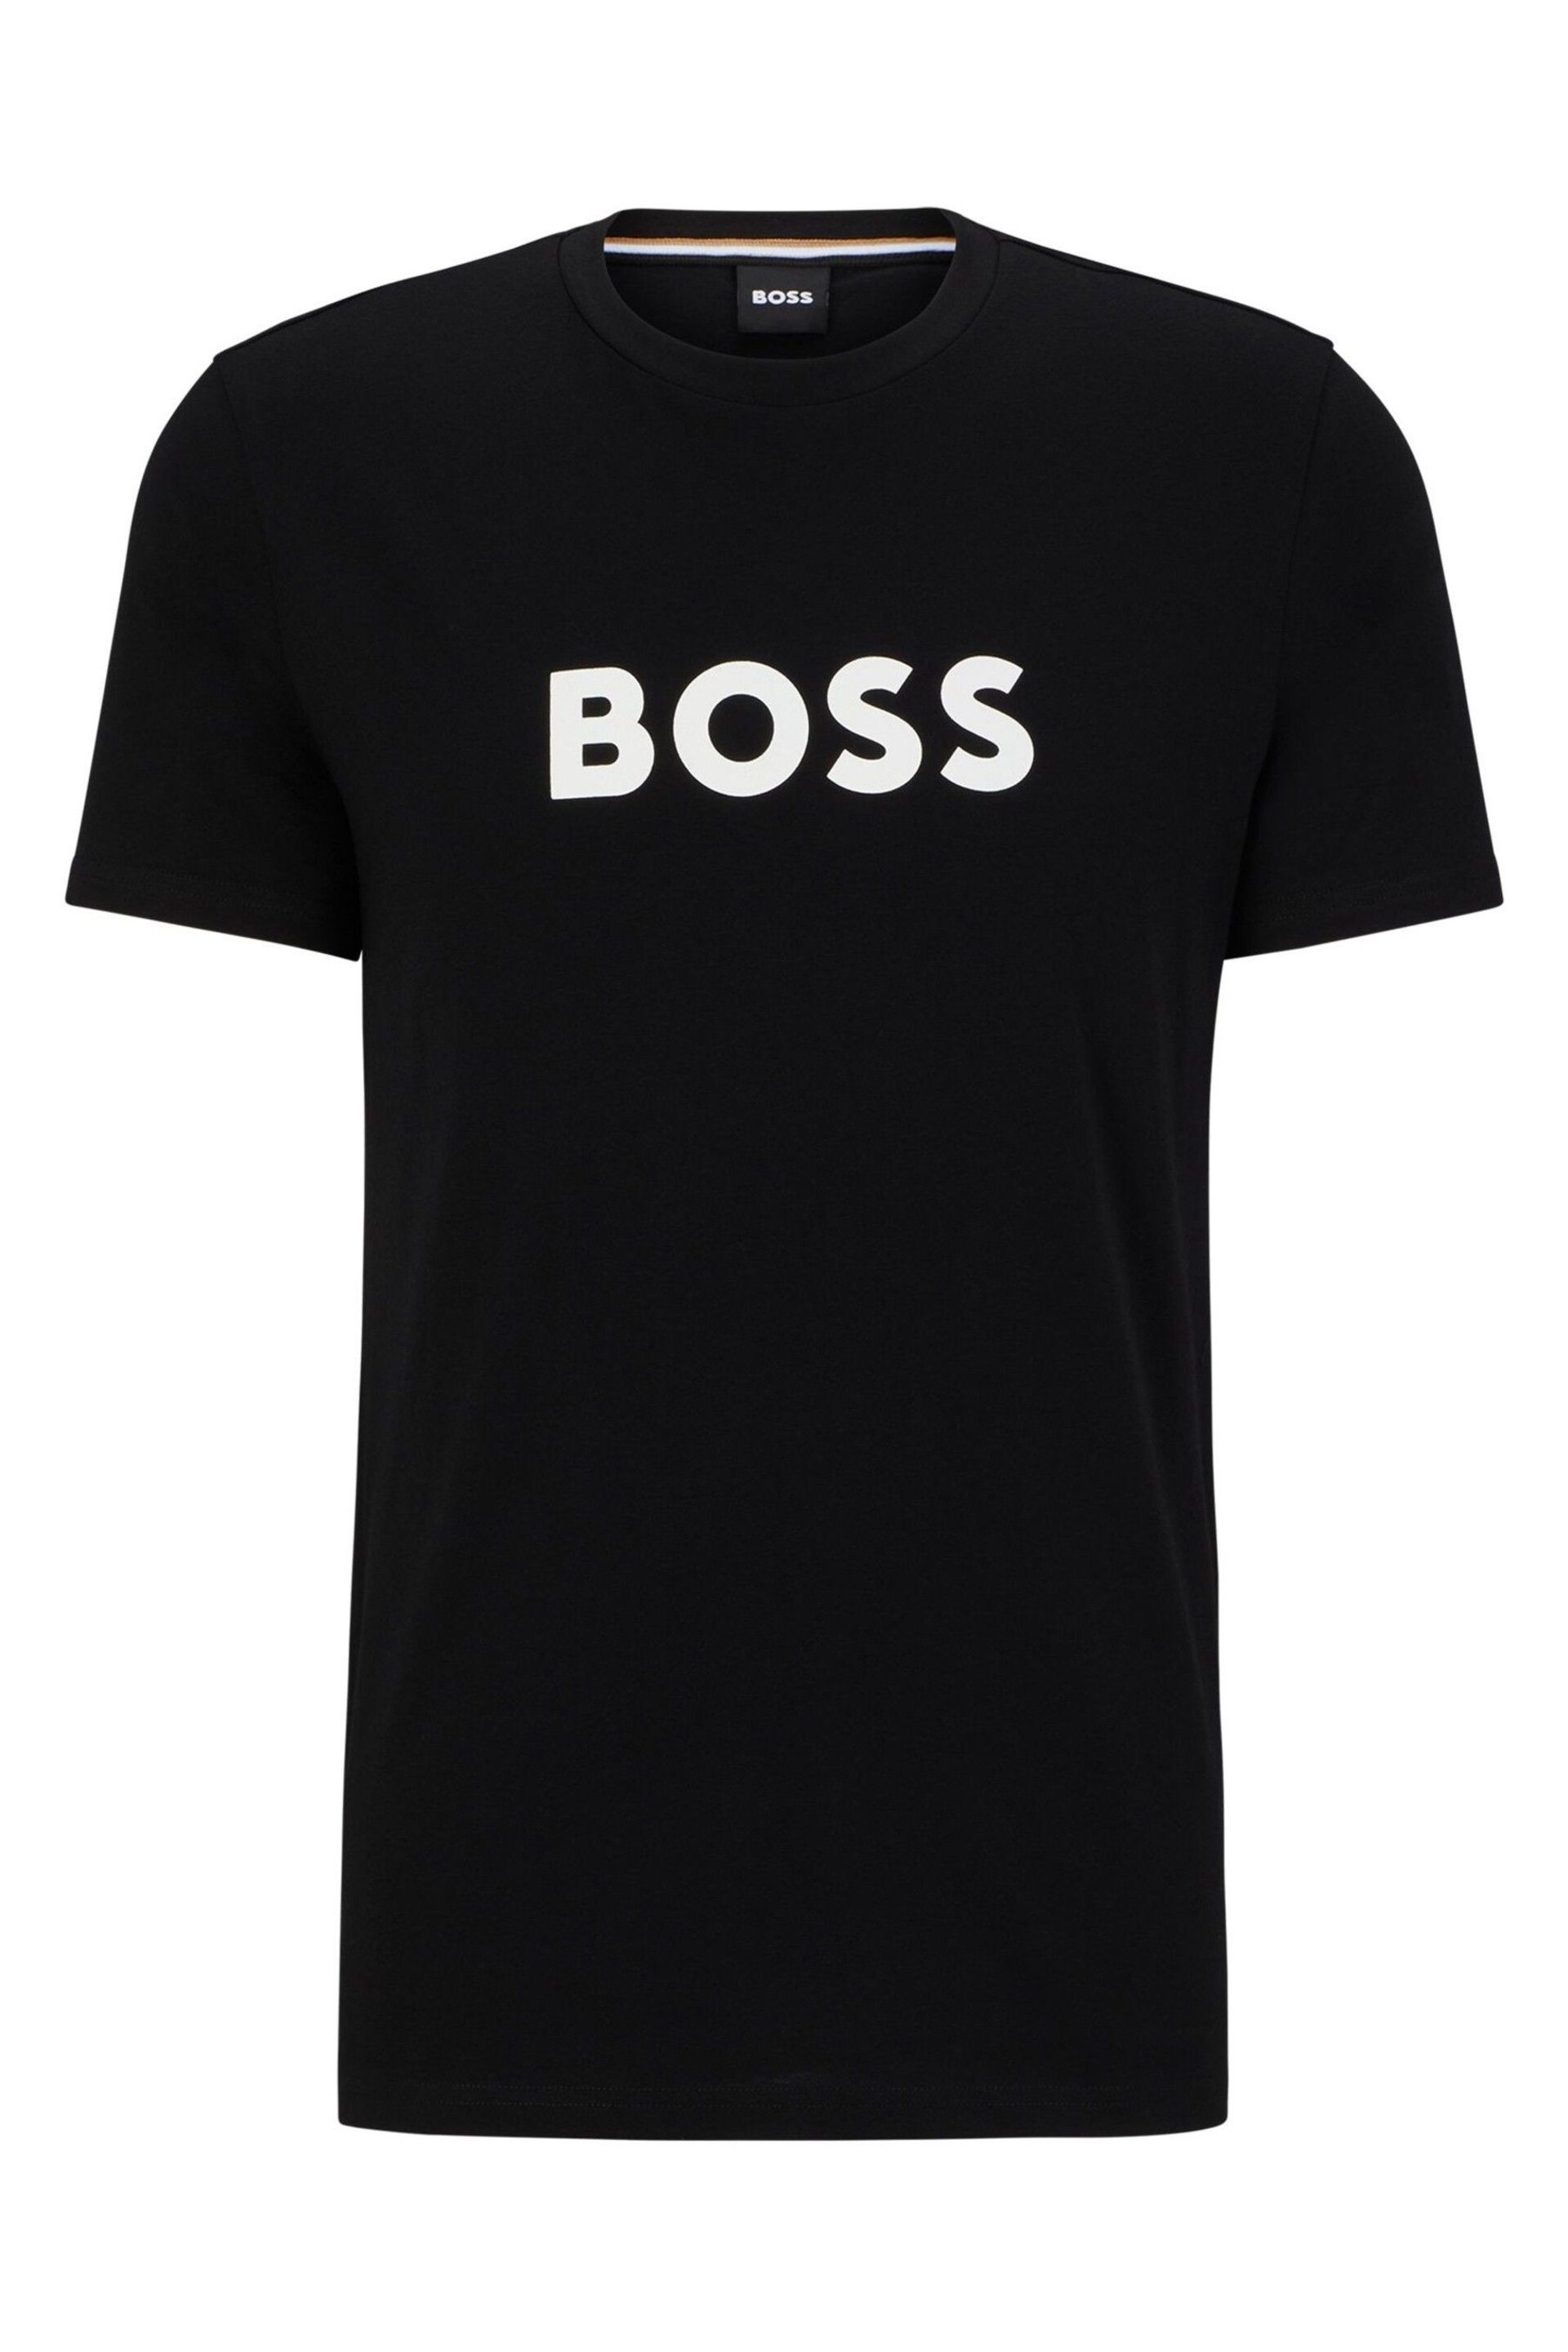 BOSS Black Large Chest Logo T-Shirt - Image 3 of 3